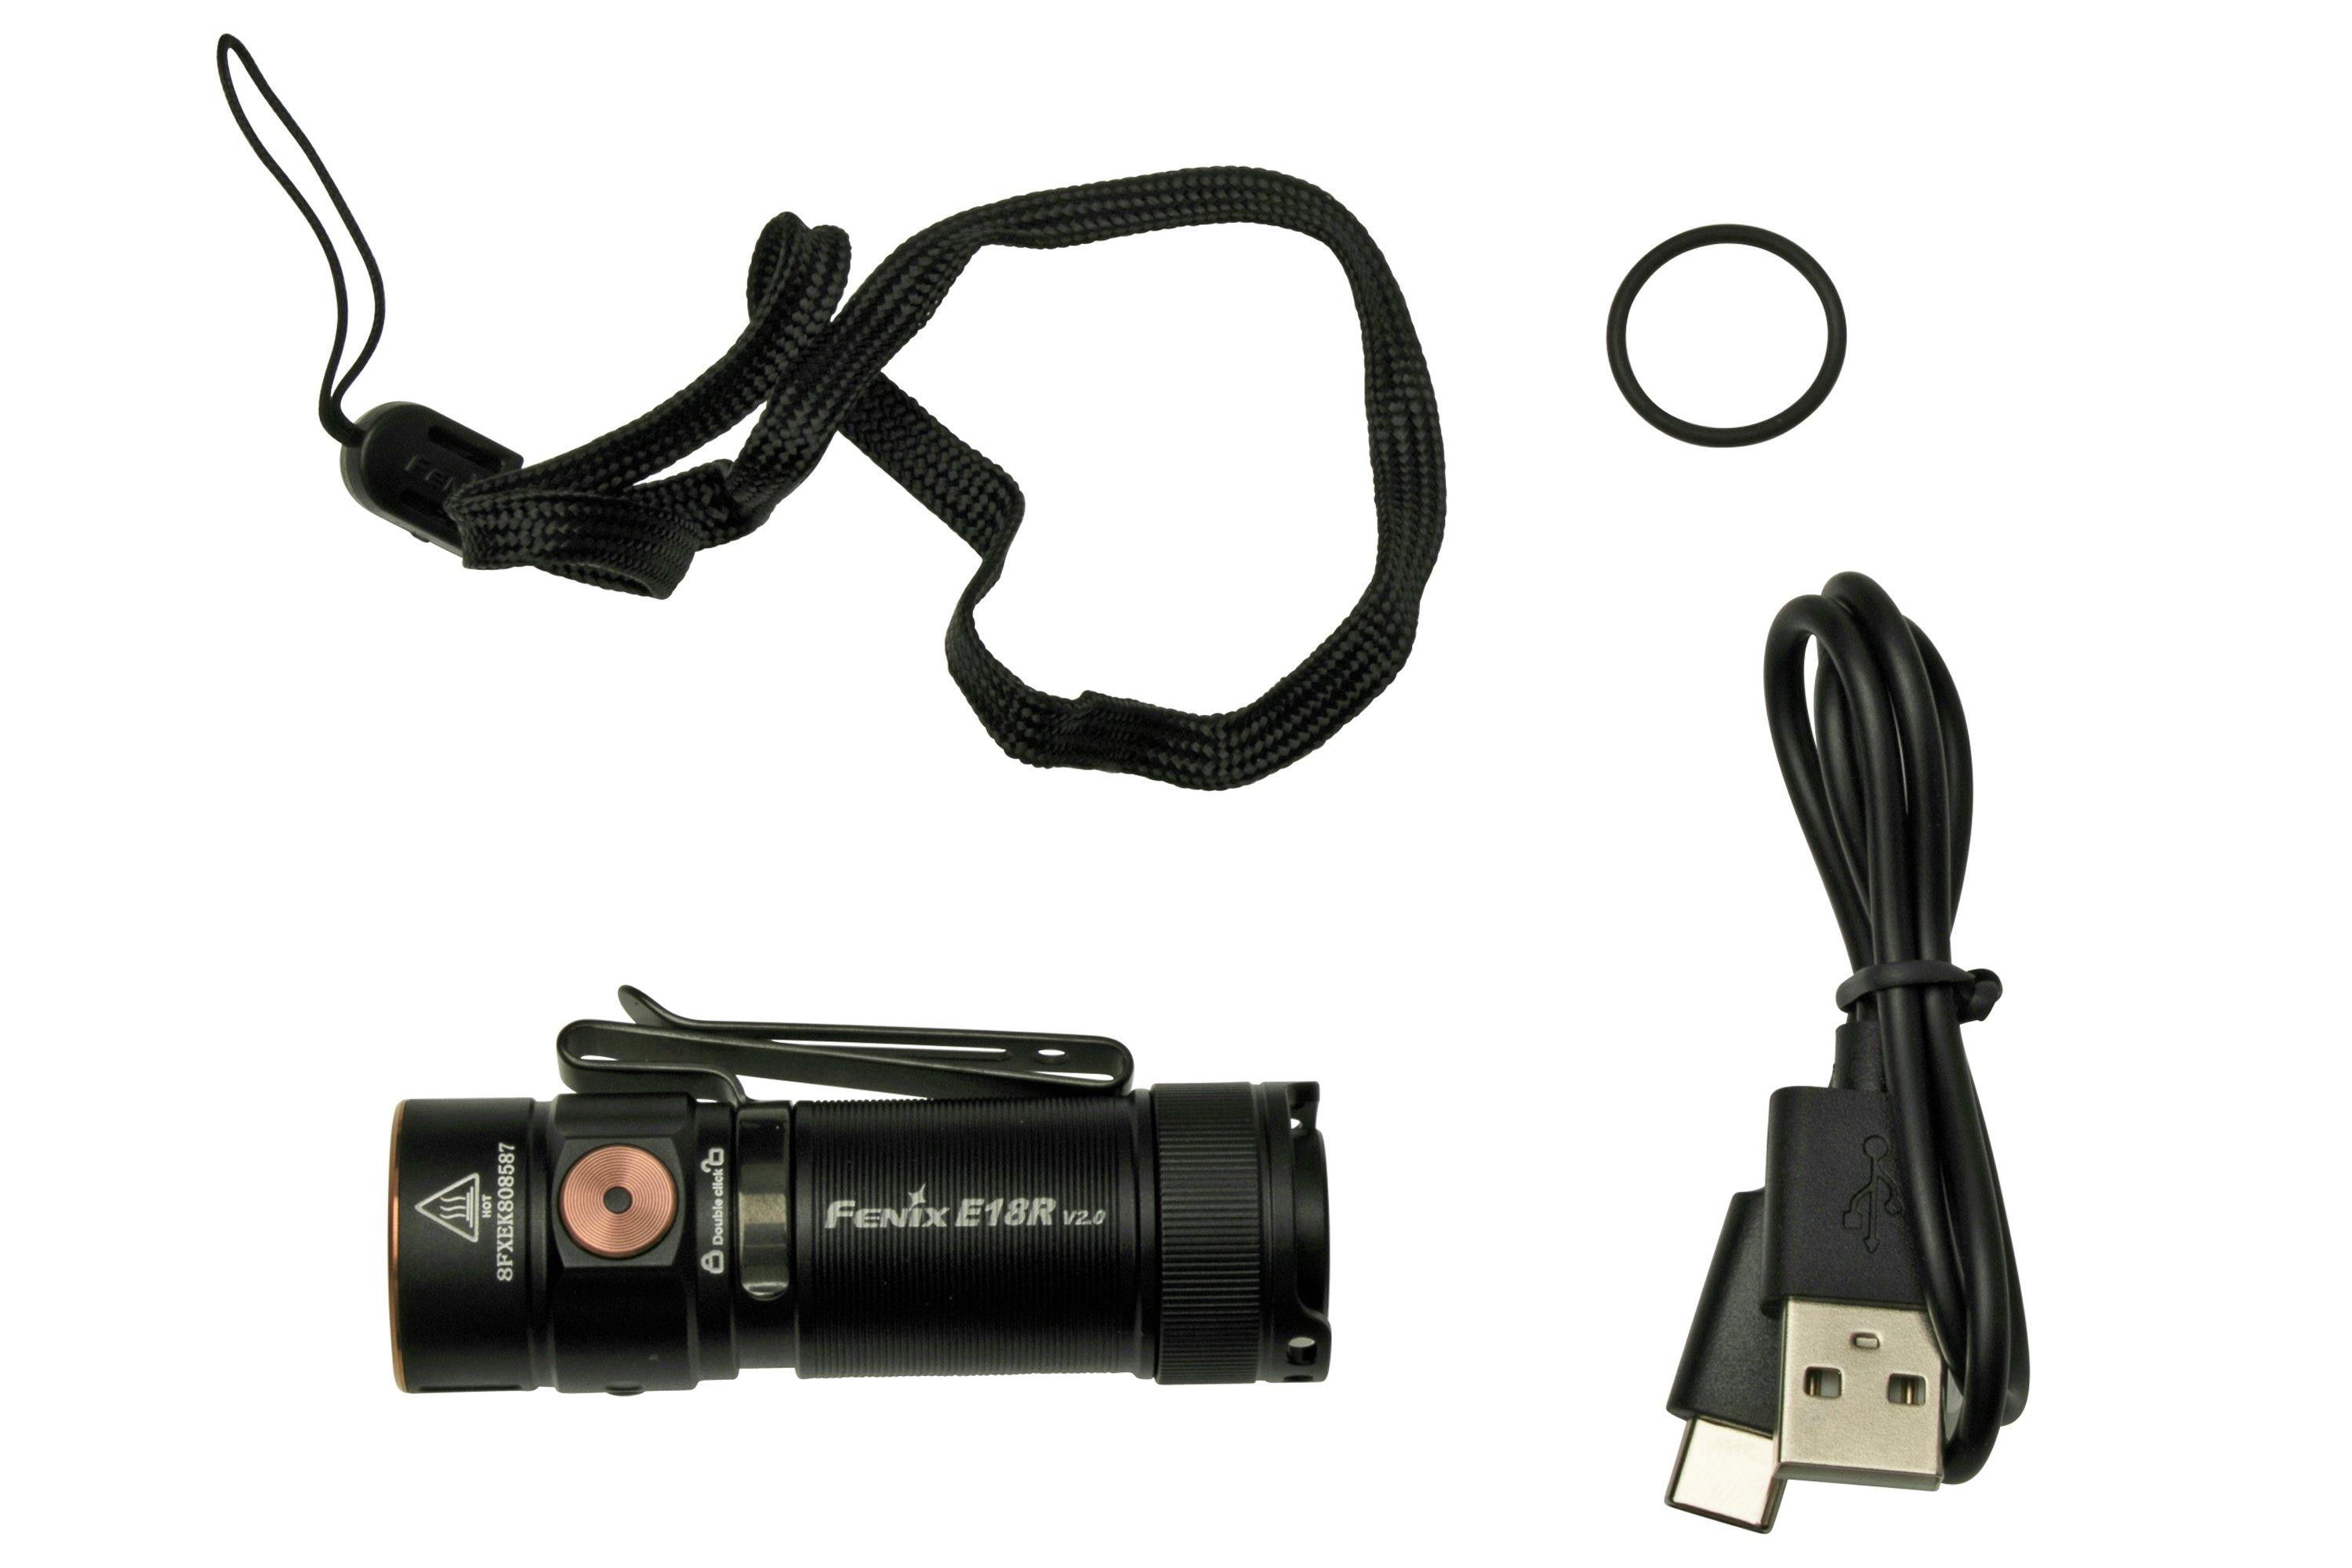 Fenix E18R rechargeable LED-flashlight